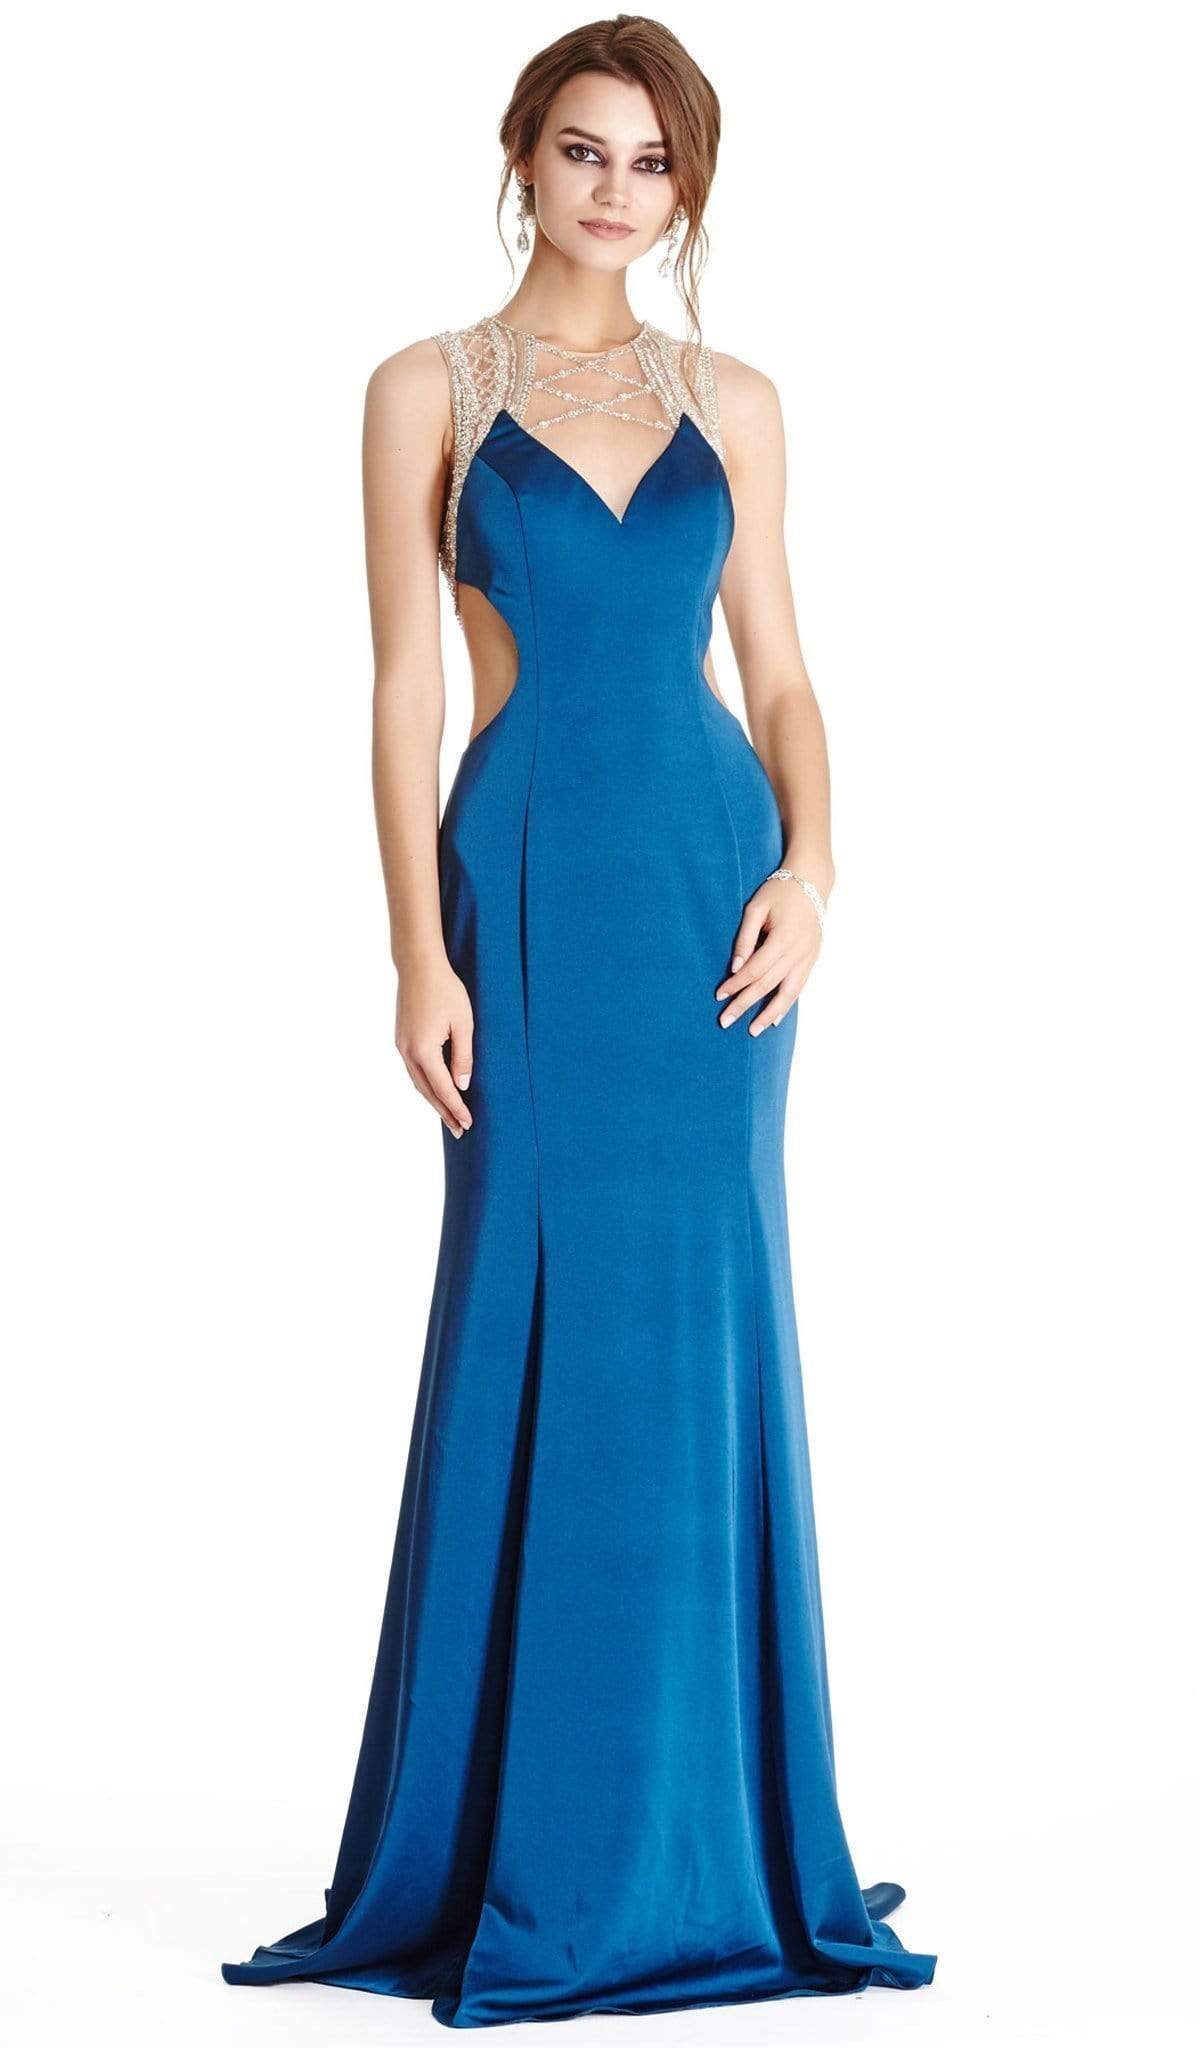 Aspeed Design - Embellished Illusion Jewel Neck Evening Dress
